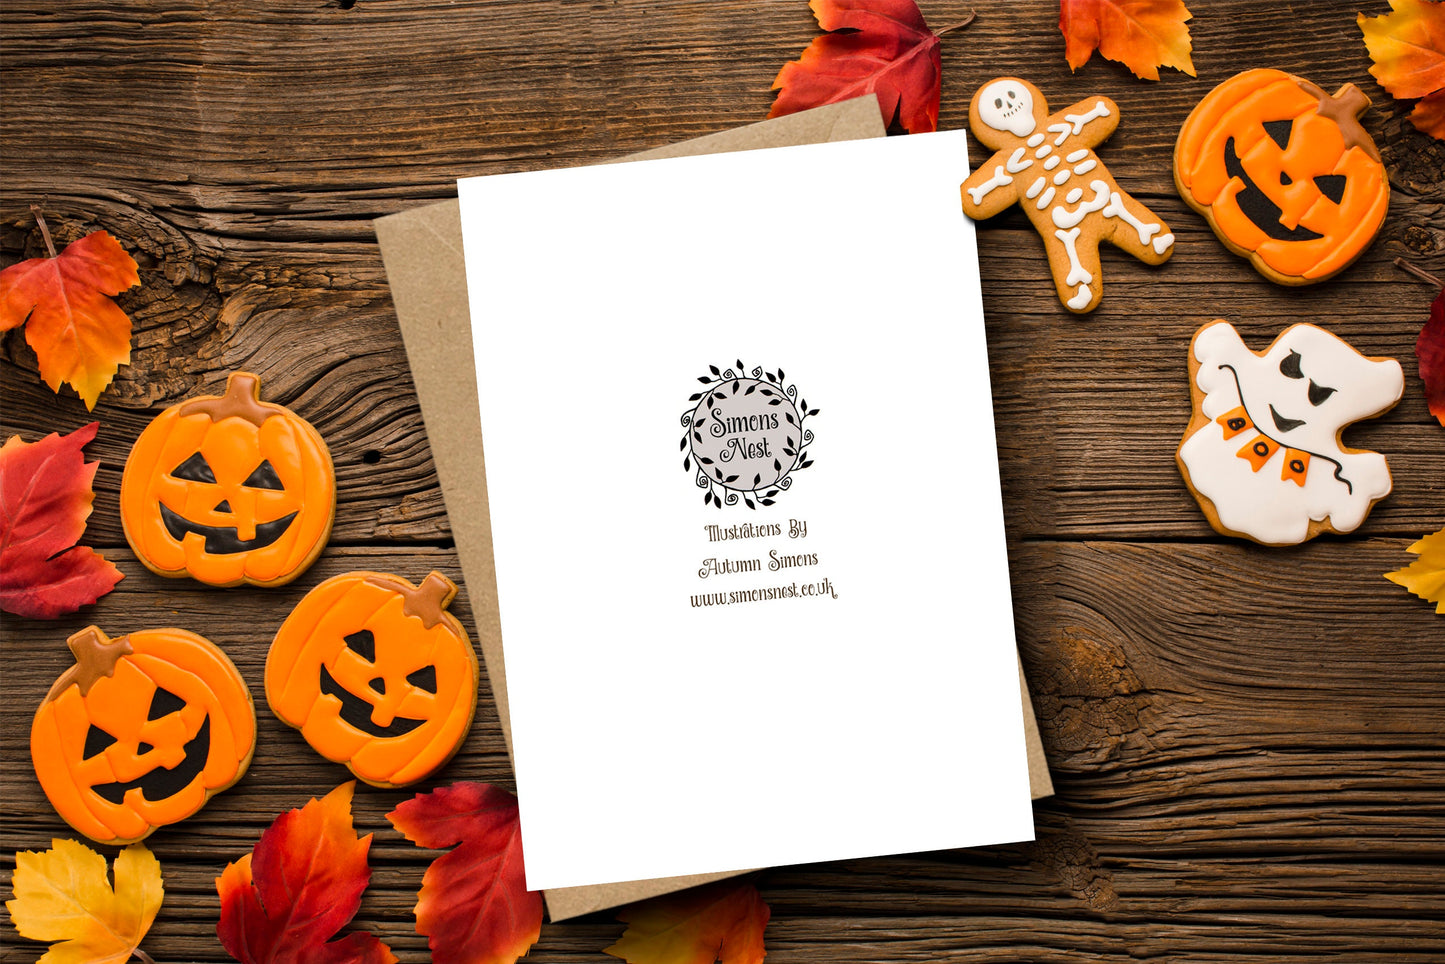 Pumpkins Forever Greetings Card & Envelope - Whimsical Pumpkin Family Illustrated Card - Orange Autumn Leaves Halloween Trick Or Treat Card